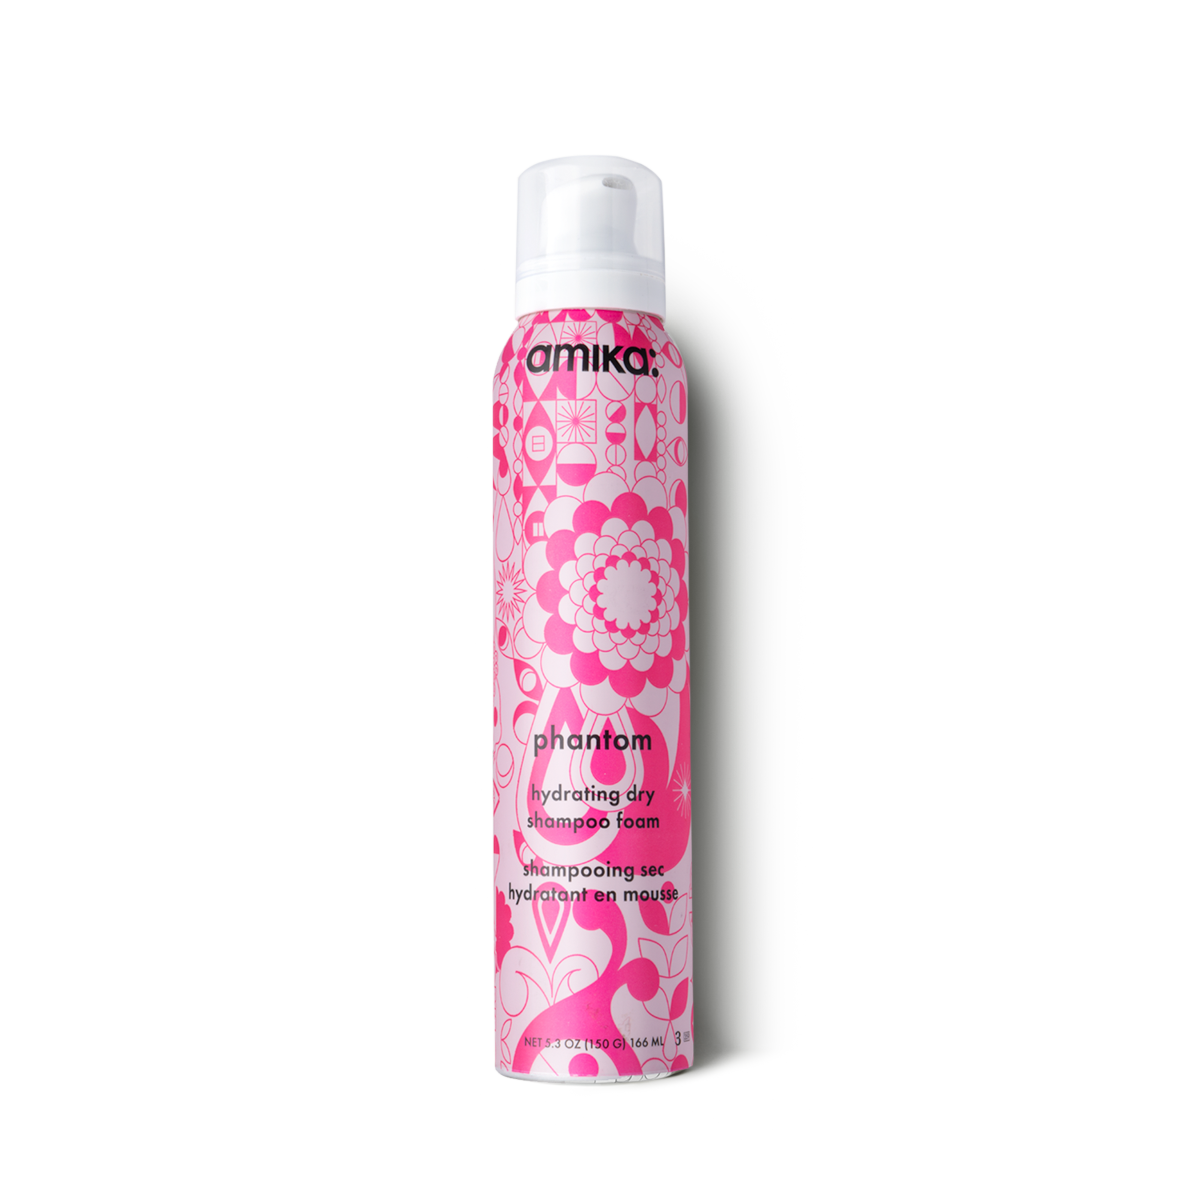 Blinke fusionere slidbane Amika Phantom Hydrating Dry Shampoo Foam — Ninette Hair Studio